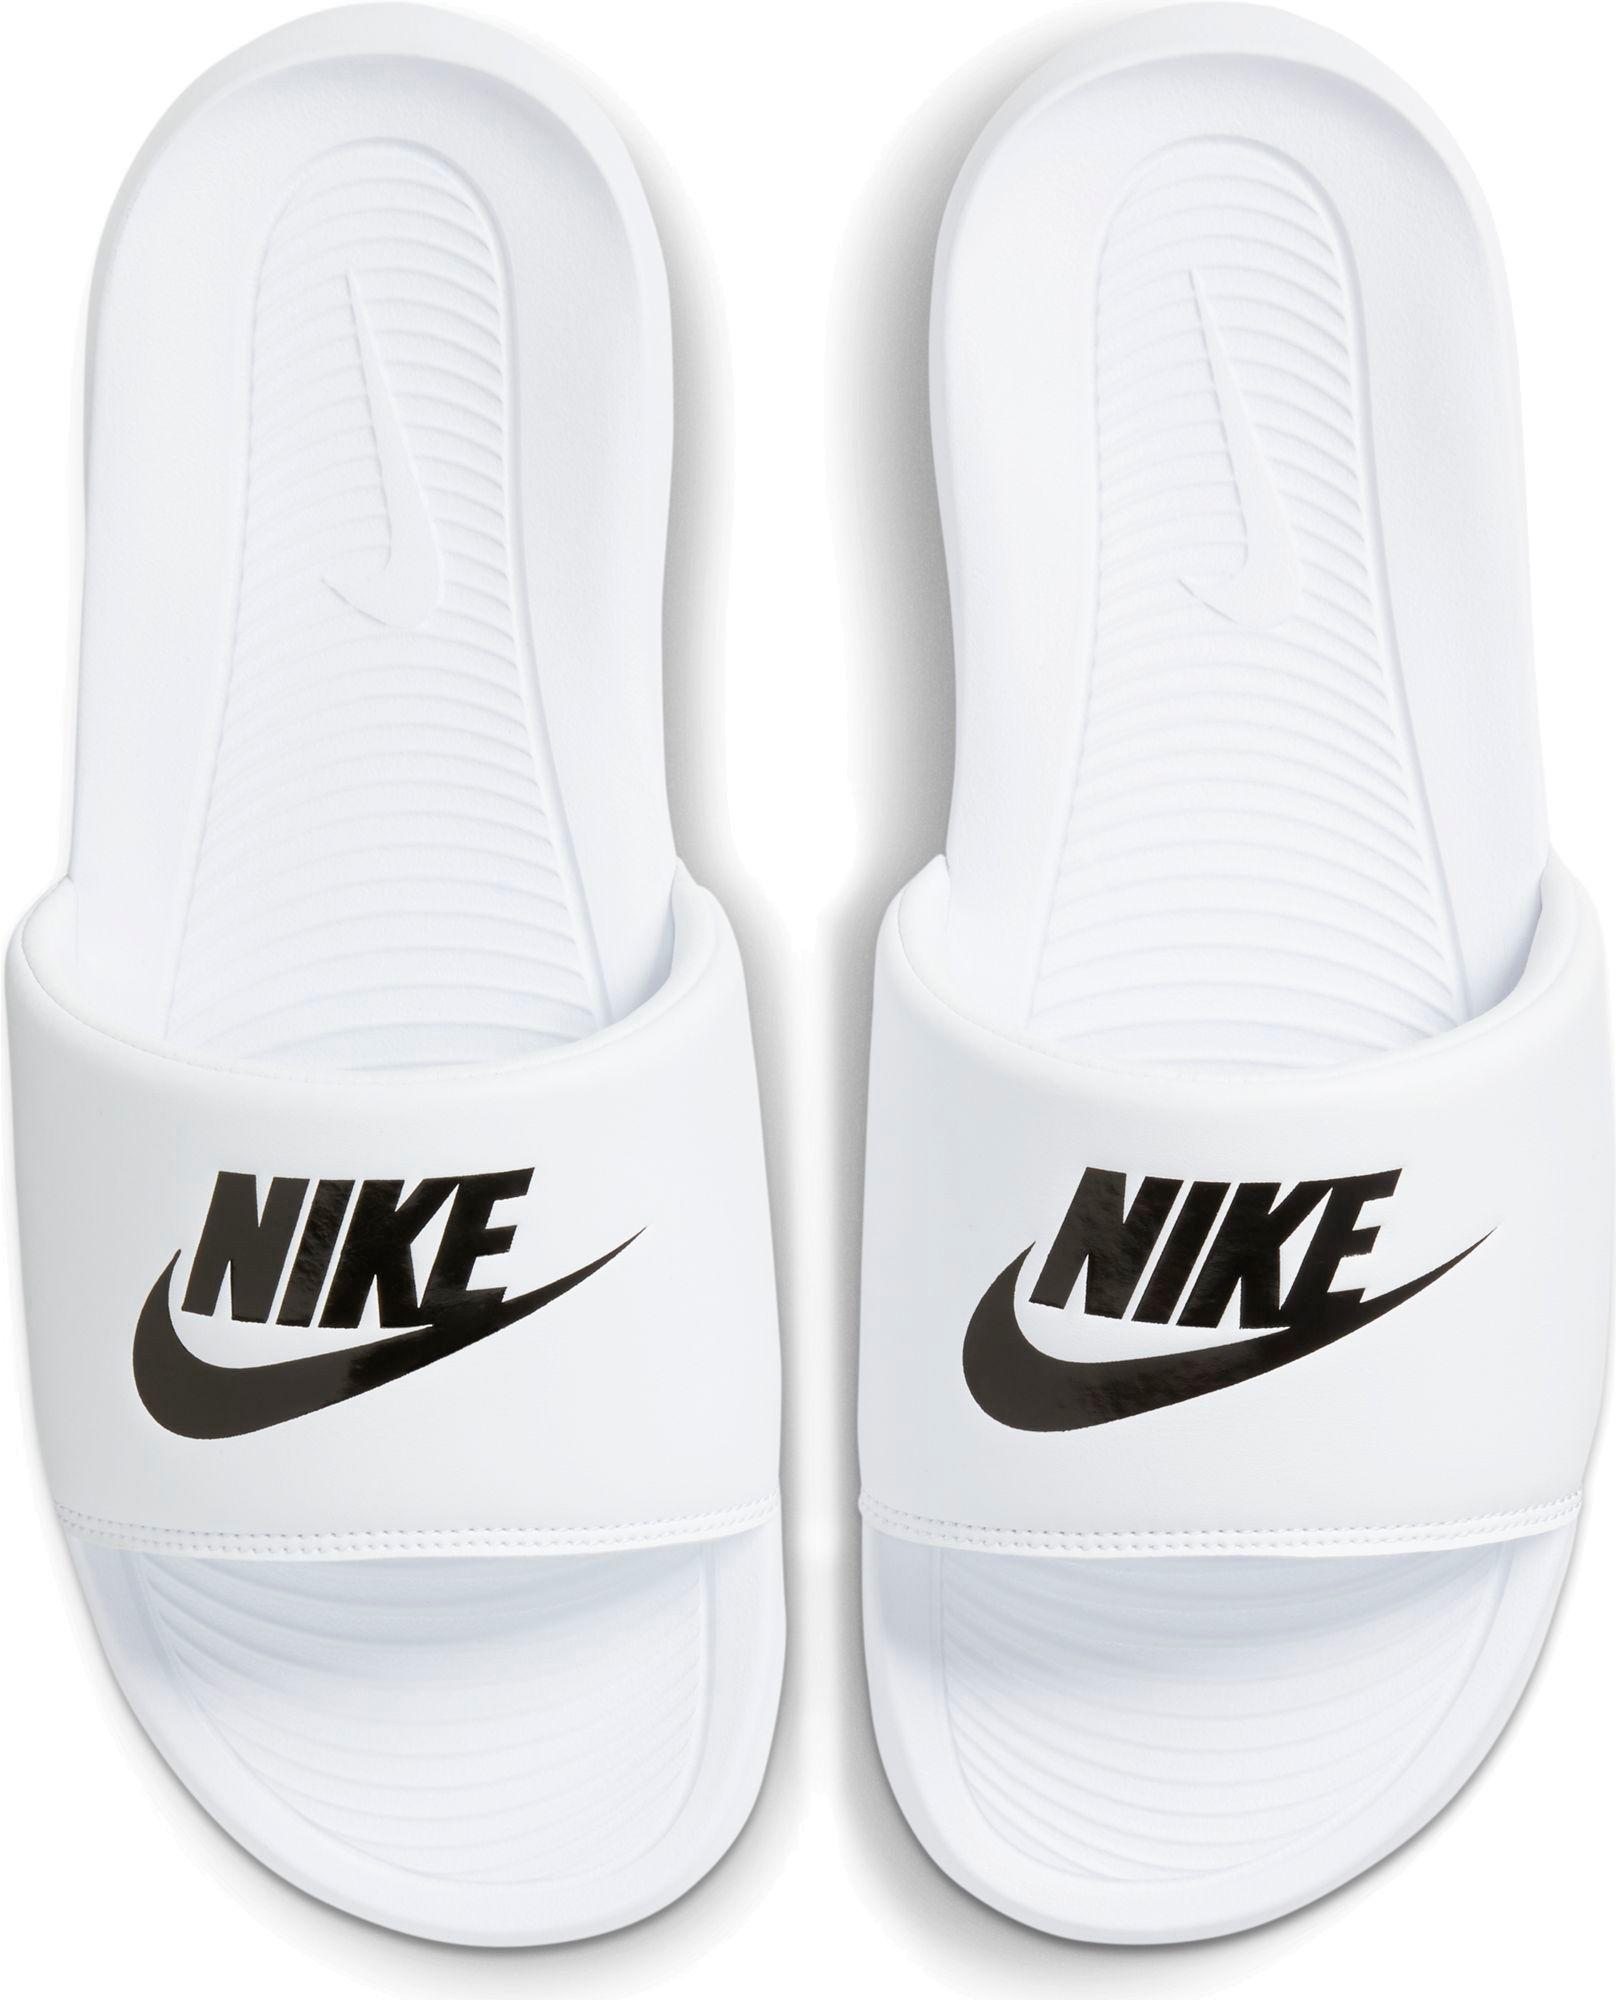 Nike Victori One Slides in White/Black/White (White) for Men - Lyst